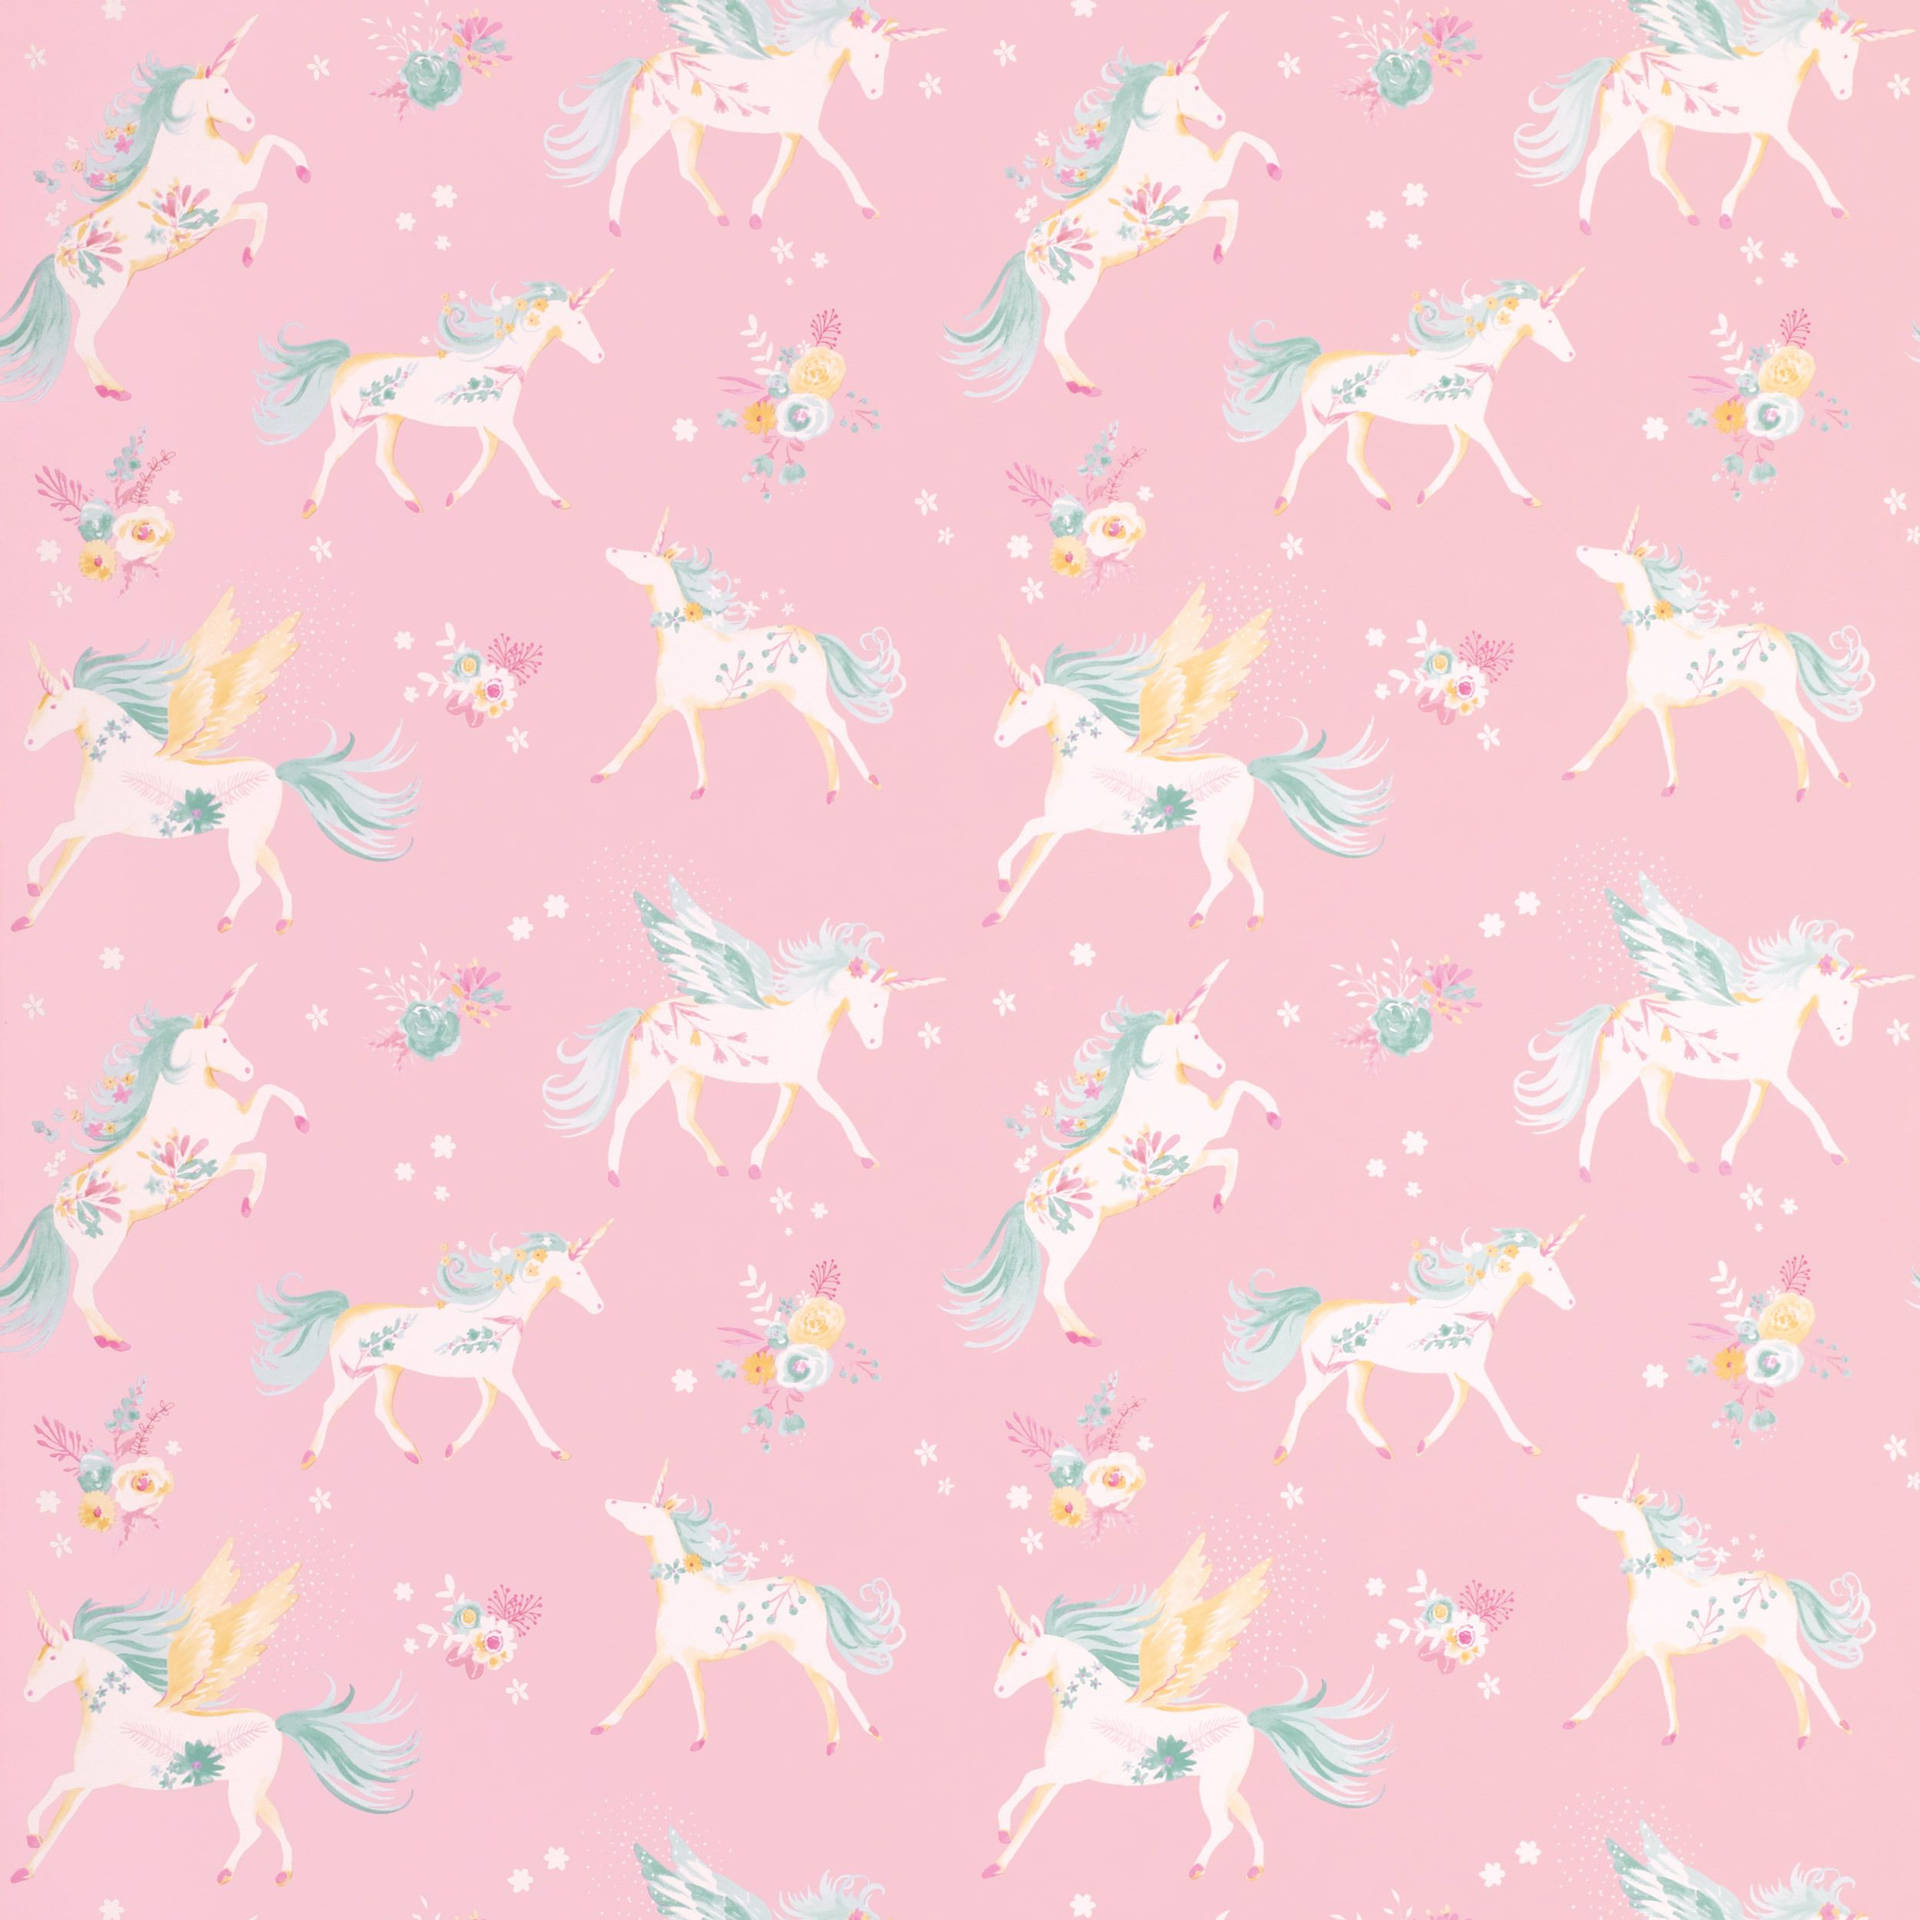 Unicorn 2500X2500 Wallpaper and Background Image